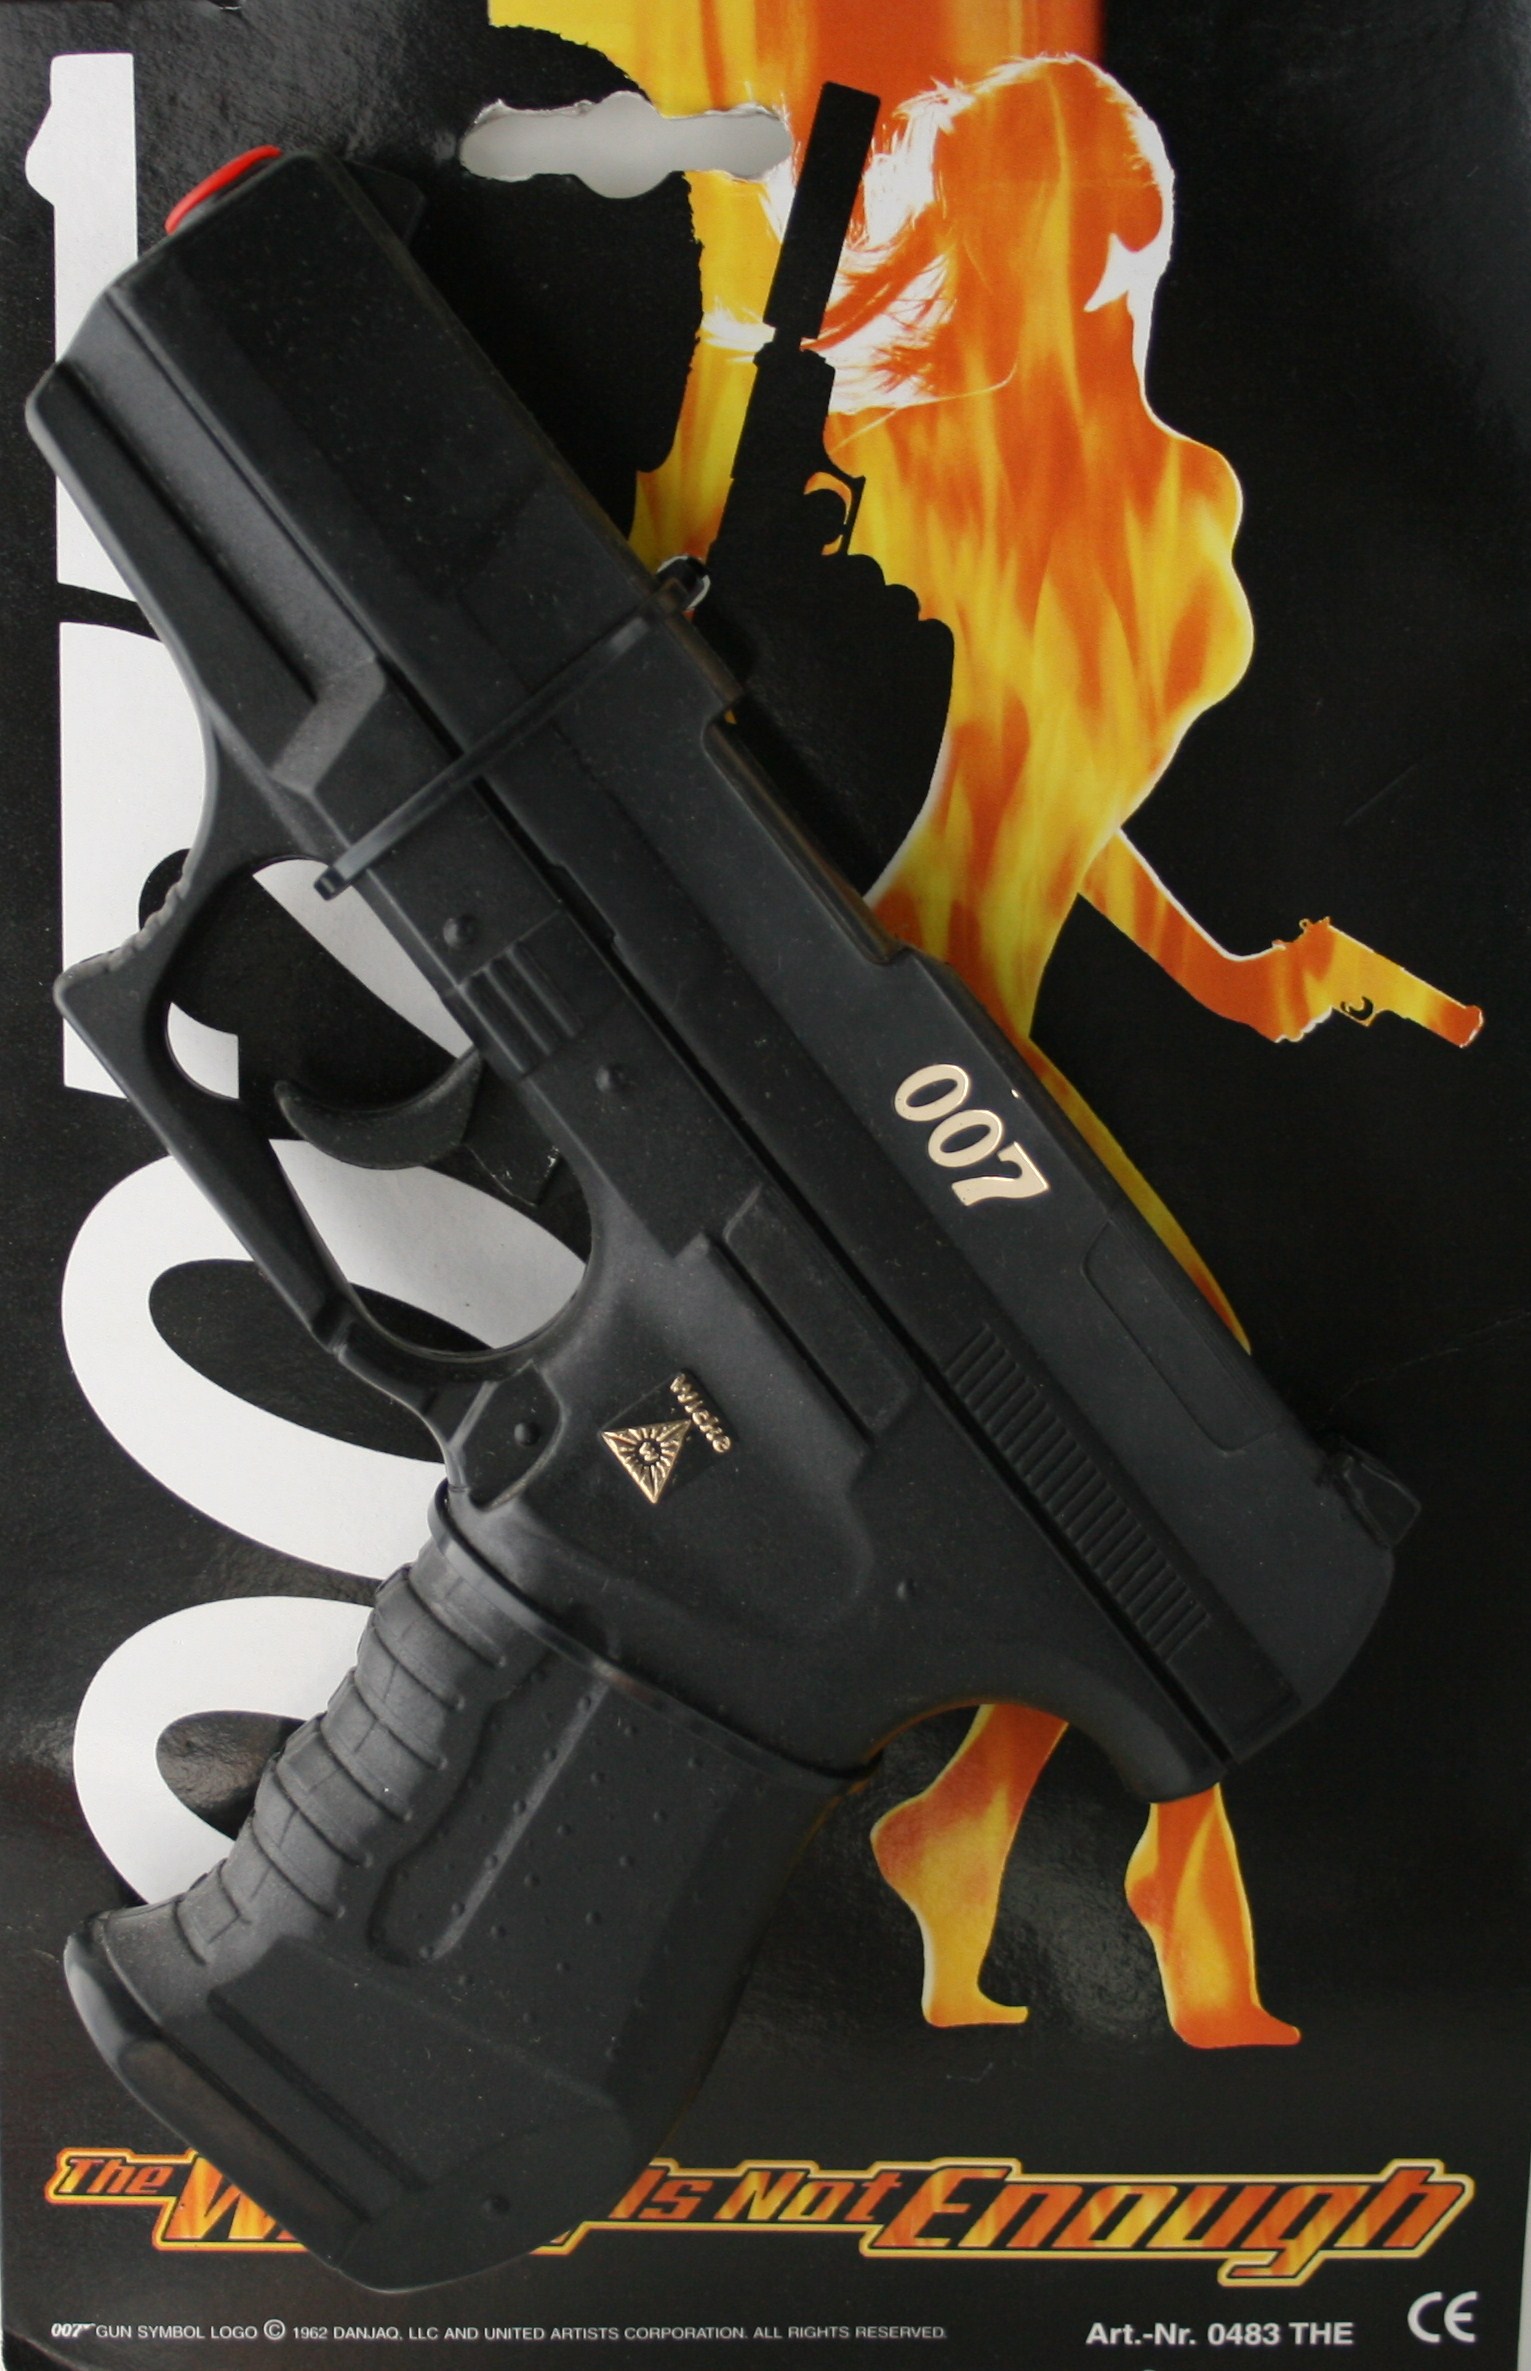 James Bond Gun LONE STAR SPECIAL AGENT 007 Walther PPK TOY GUN WICKE 25 Shots 